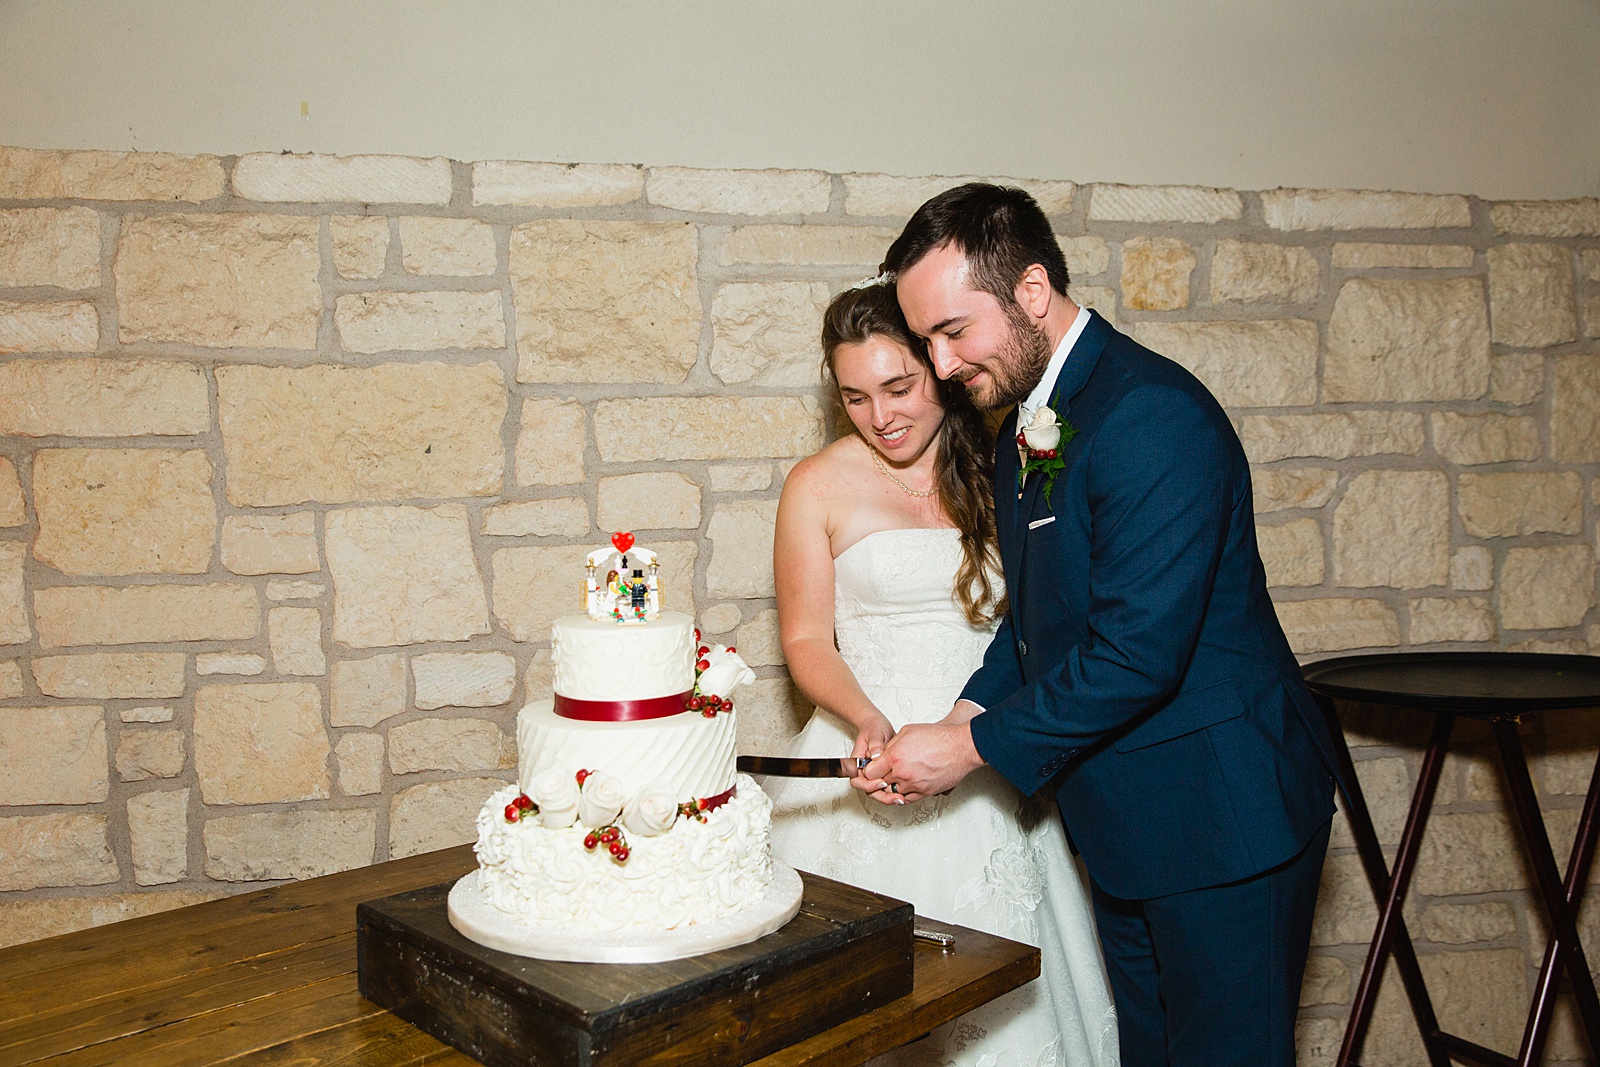 Bride and Groom cutting their wedding cake at their Ocotillo Oasis wedding reception by Arizona wedding photographer PMA Photography.